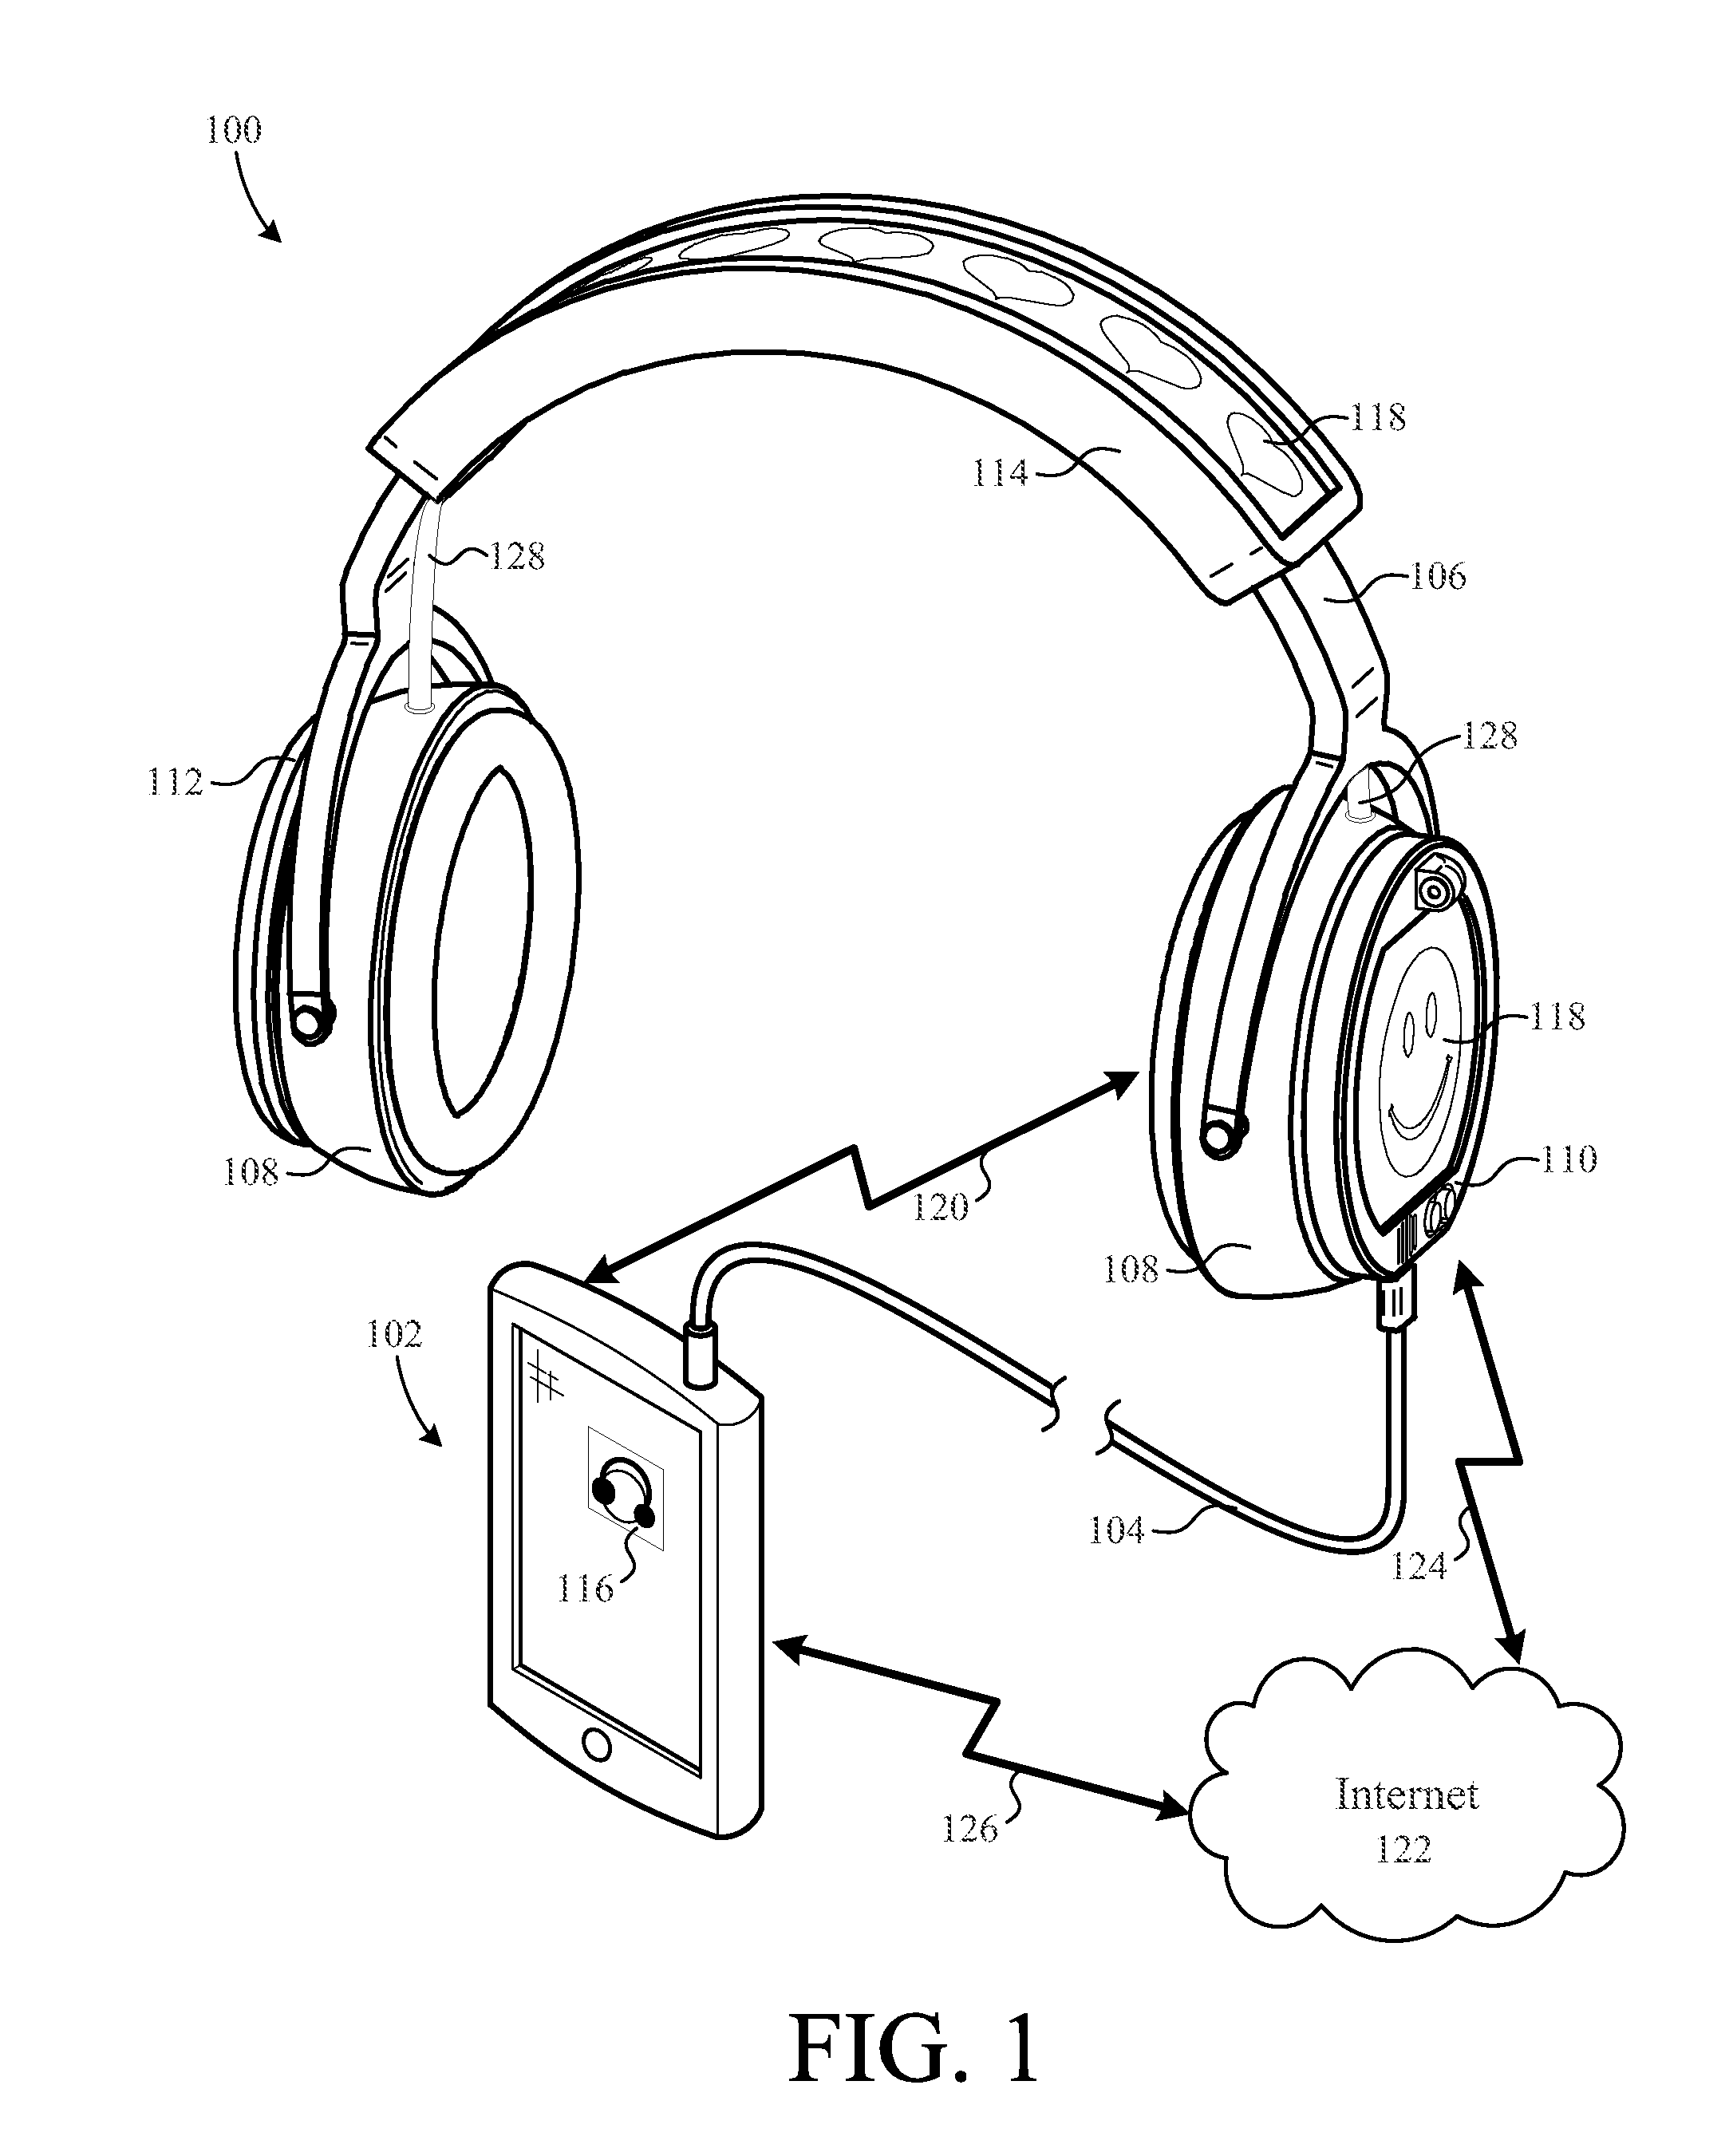 Headphones with interactive display